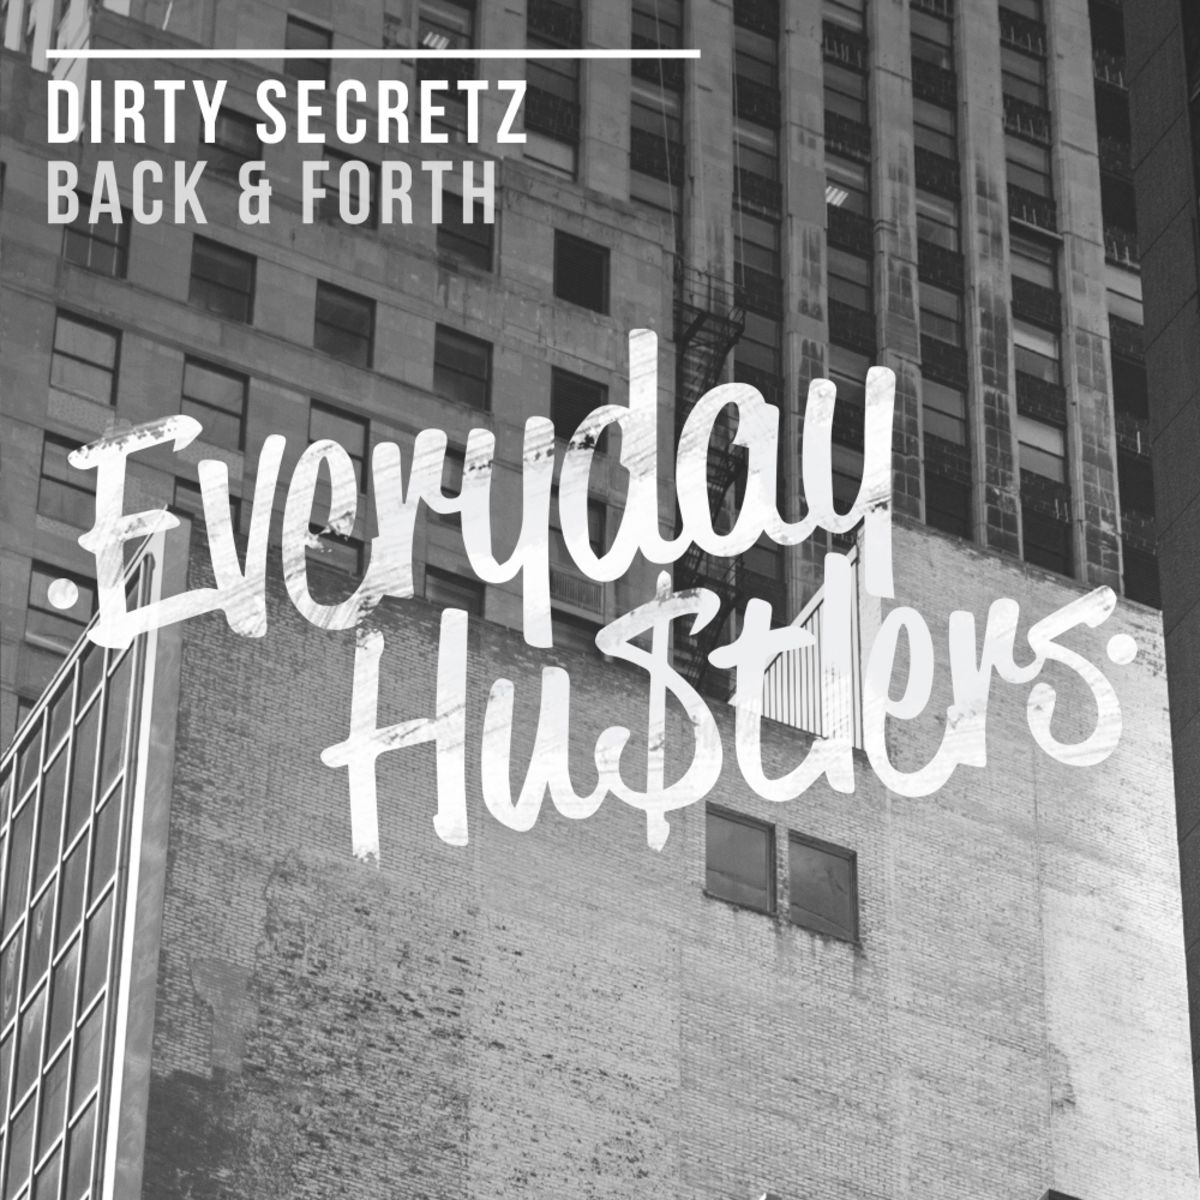 Dirty Secretz - Back & Forth / Everyday Hustlers